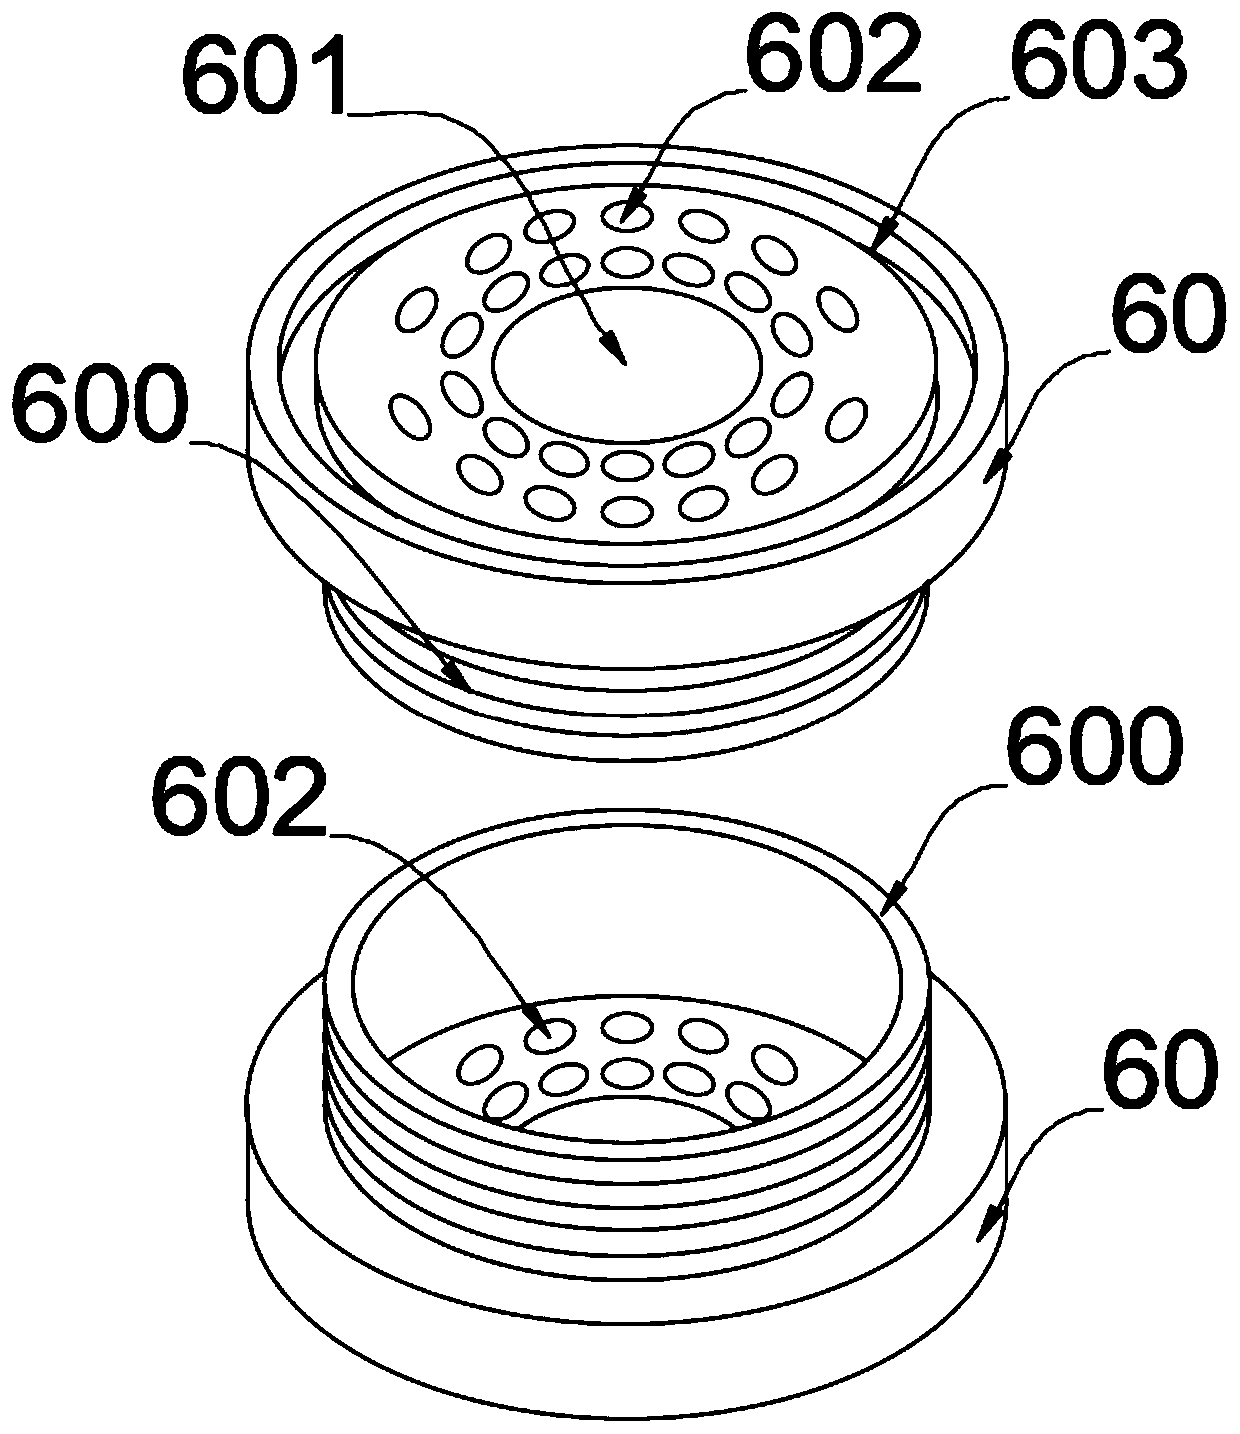 Spiral extrusion separator